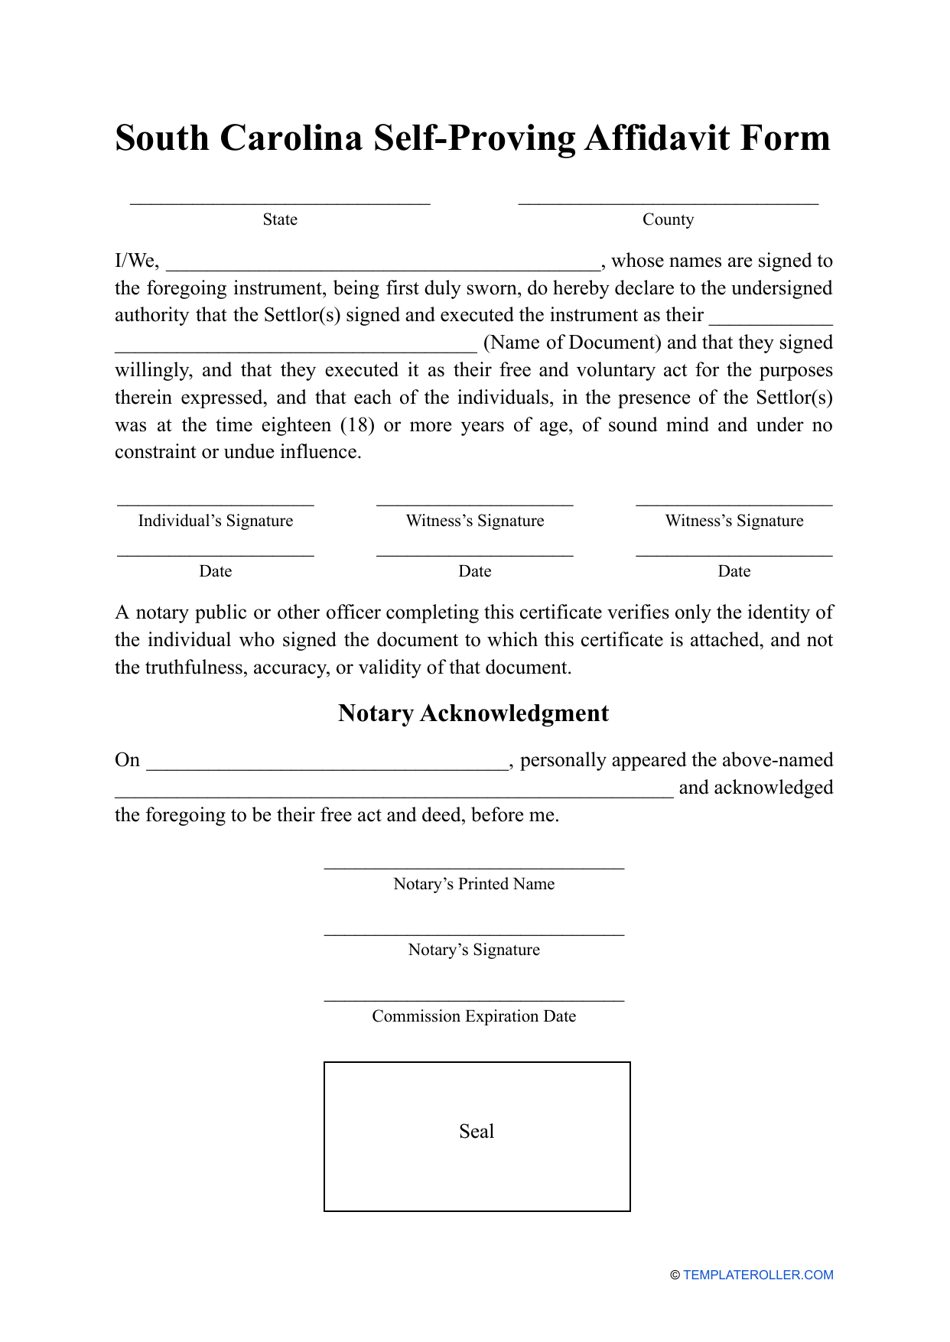 Self-proving Affidavit Form - South Carolina, Page 1